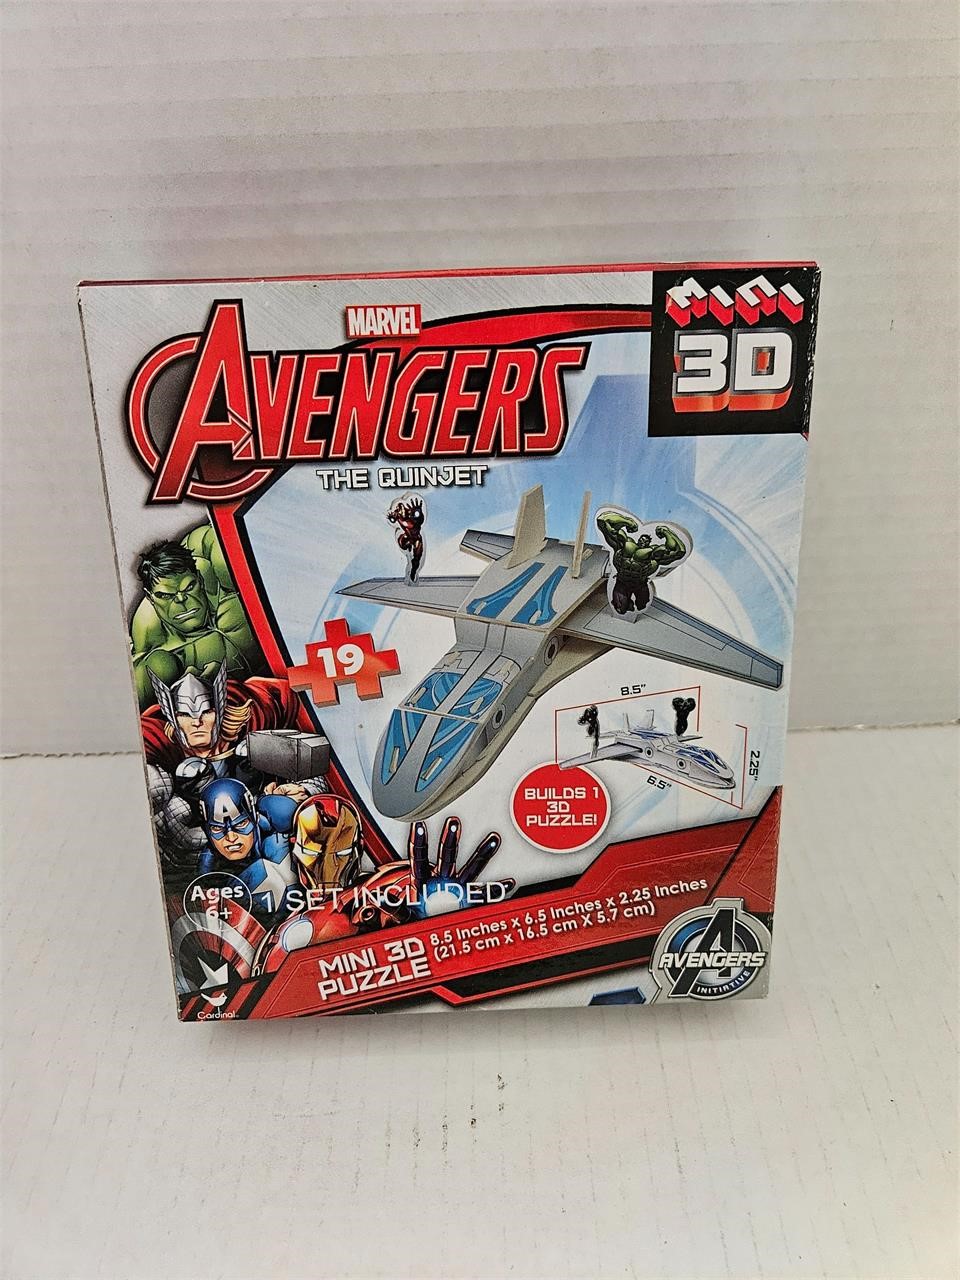 Marvel Avengers Mini 3D Puzzle